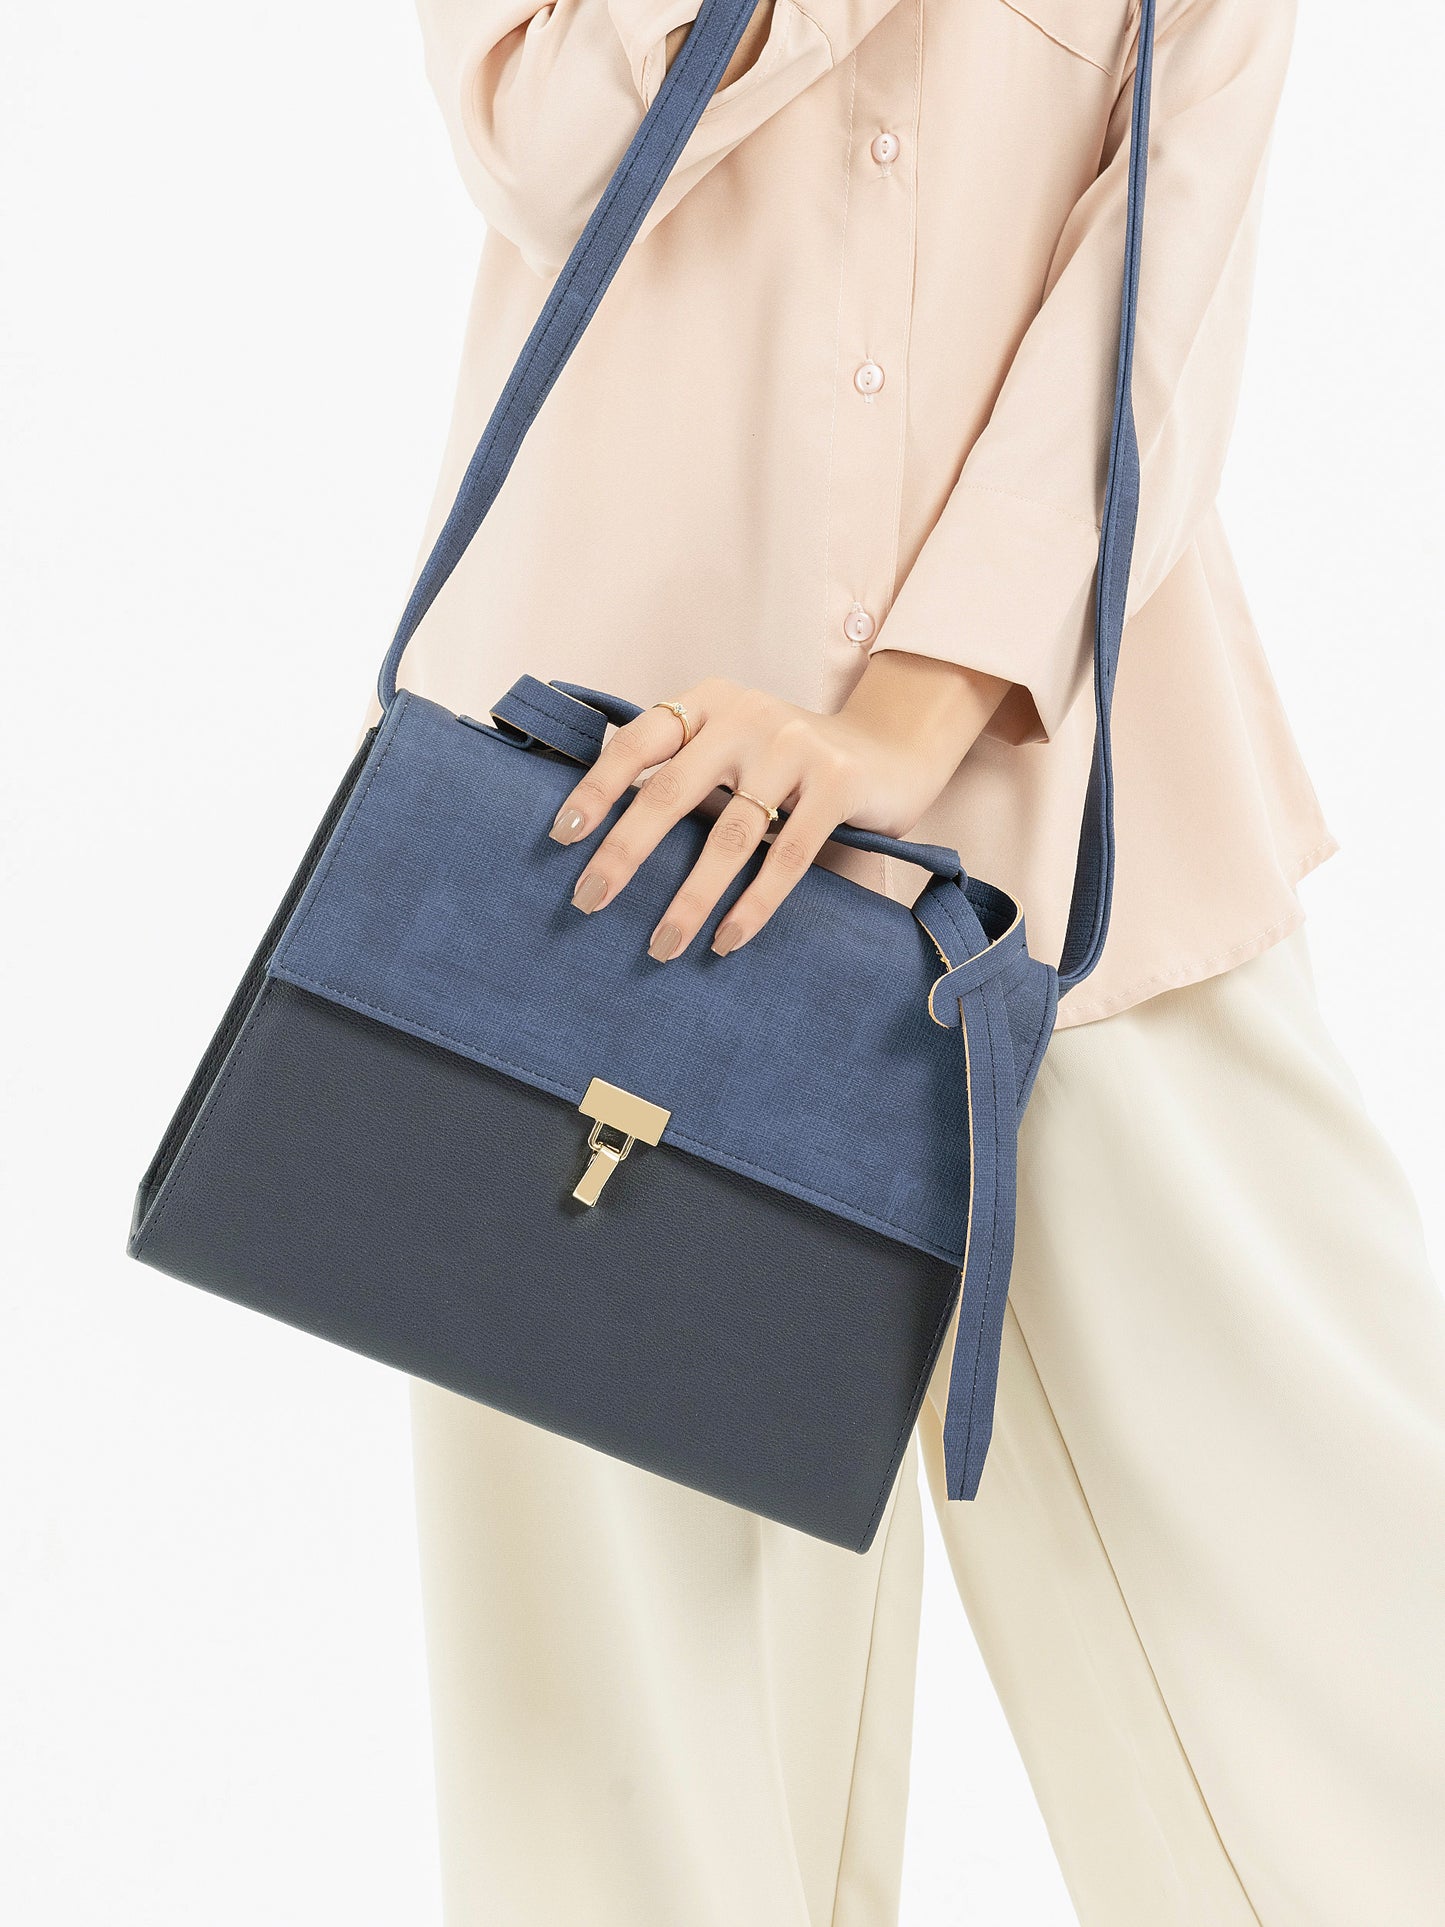 Box Style Handbag